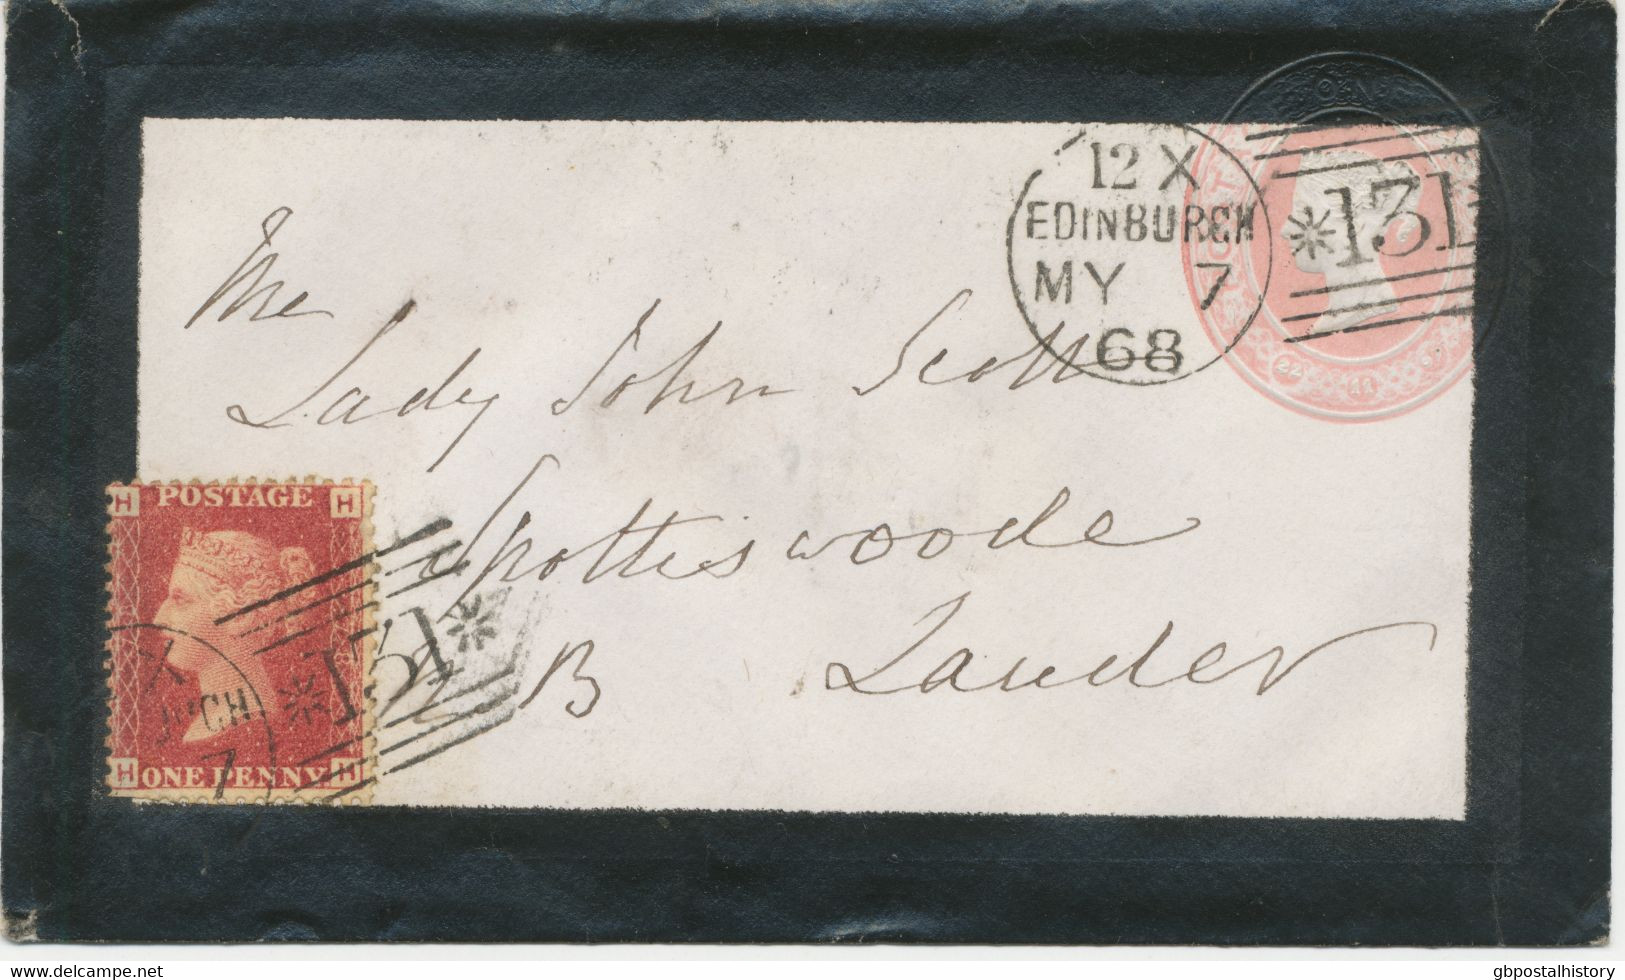 GB „131 / EDINBURGH“ Scottish Duplex Postmark (between 3 Thin Bars, Different Lenght, 131 Between Stars) On VF PS - Briefe U. Dokumente